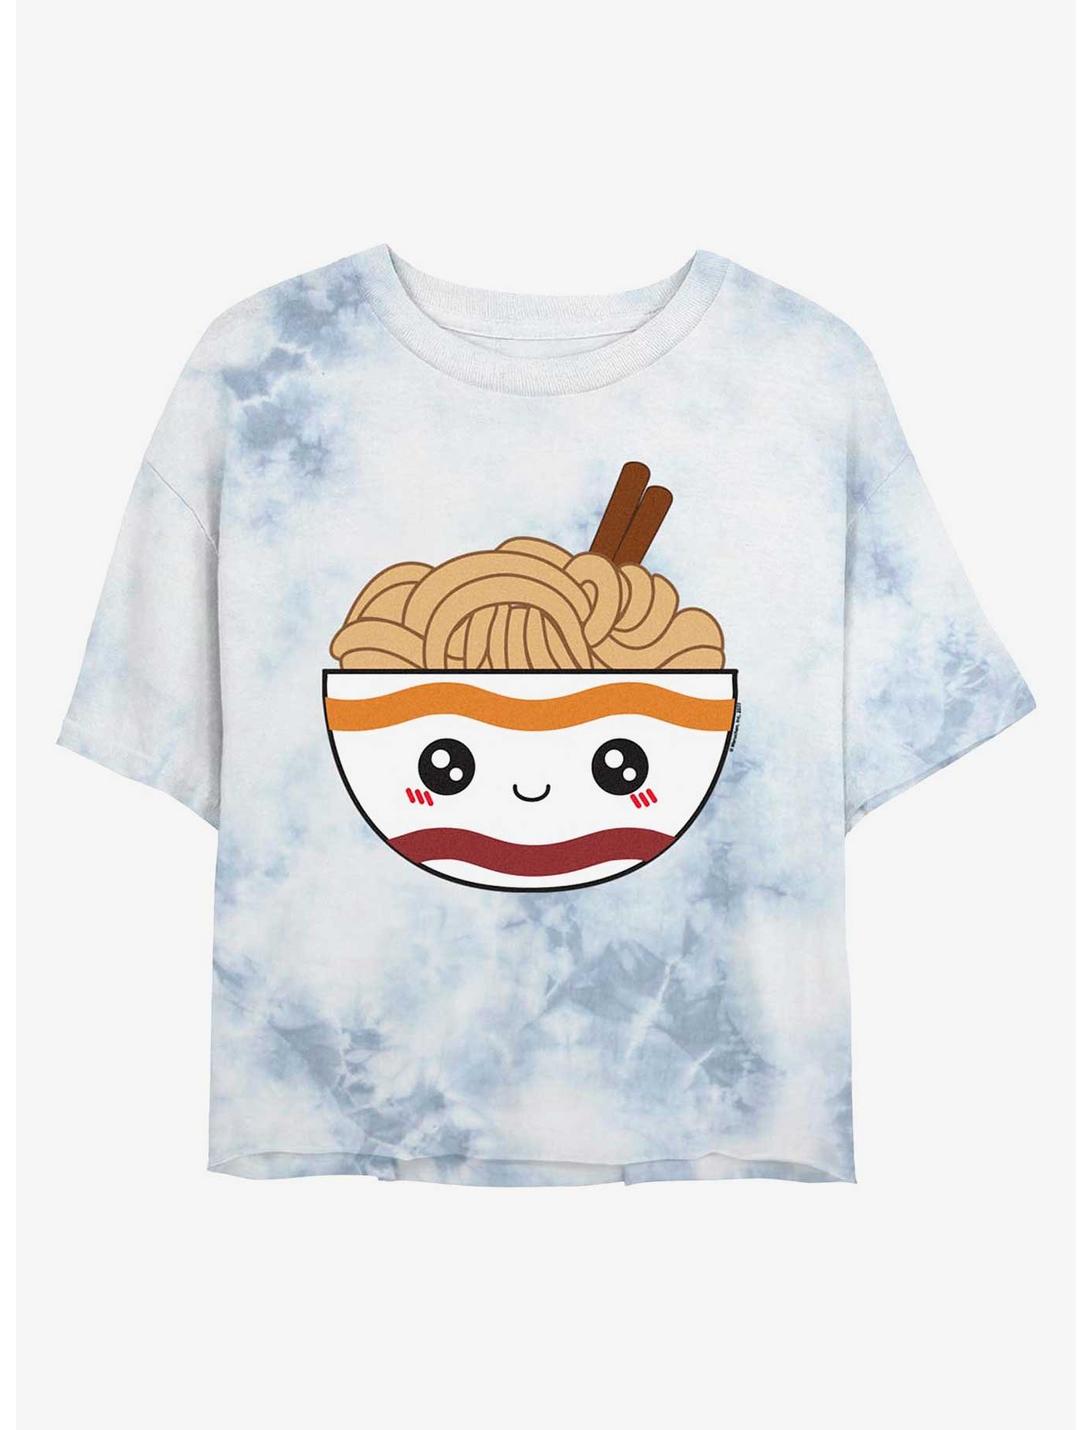 Maruchan Noodle Bowl Tie-Dye Girls Crop T-Shirt, WHITEBLUE, hi-res